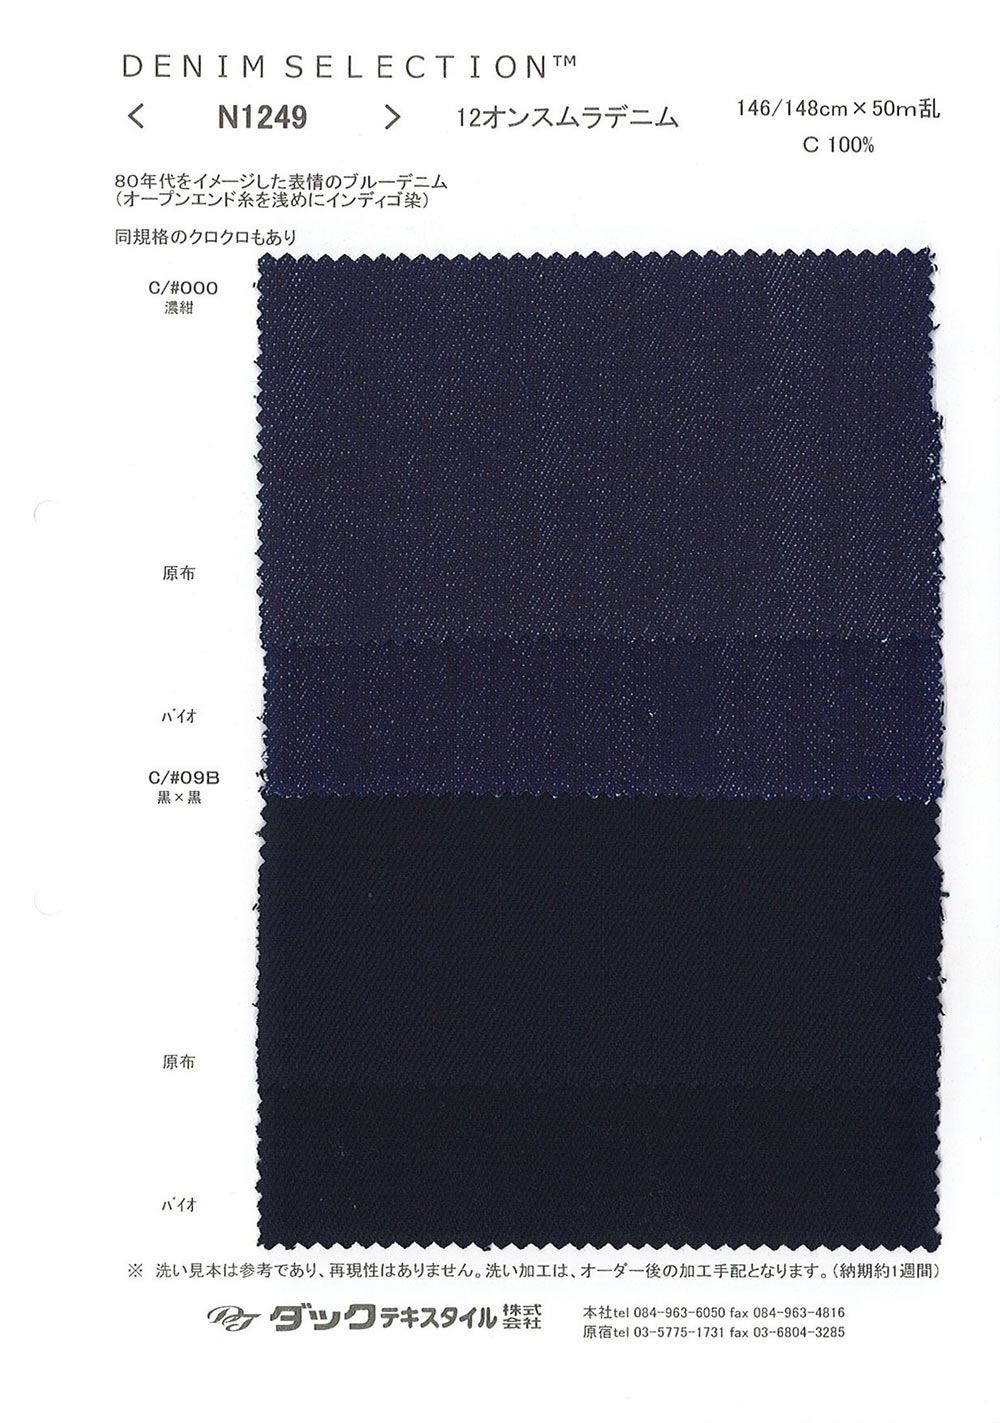 N1249 12 Unzen Mura Denim[Textilgewebe] DUCK TEXTILE